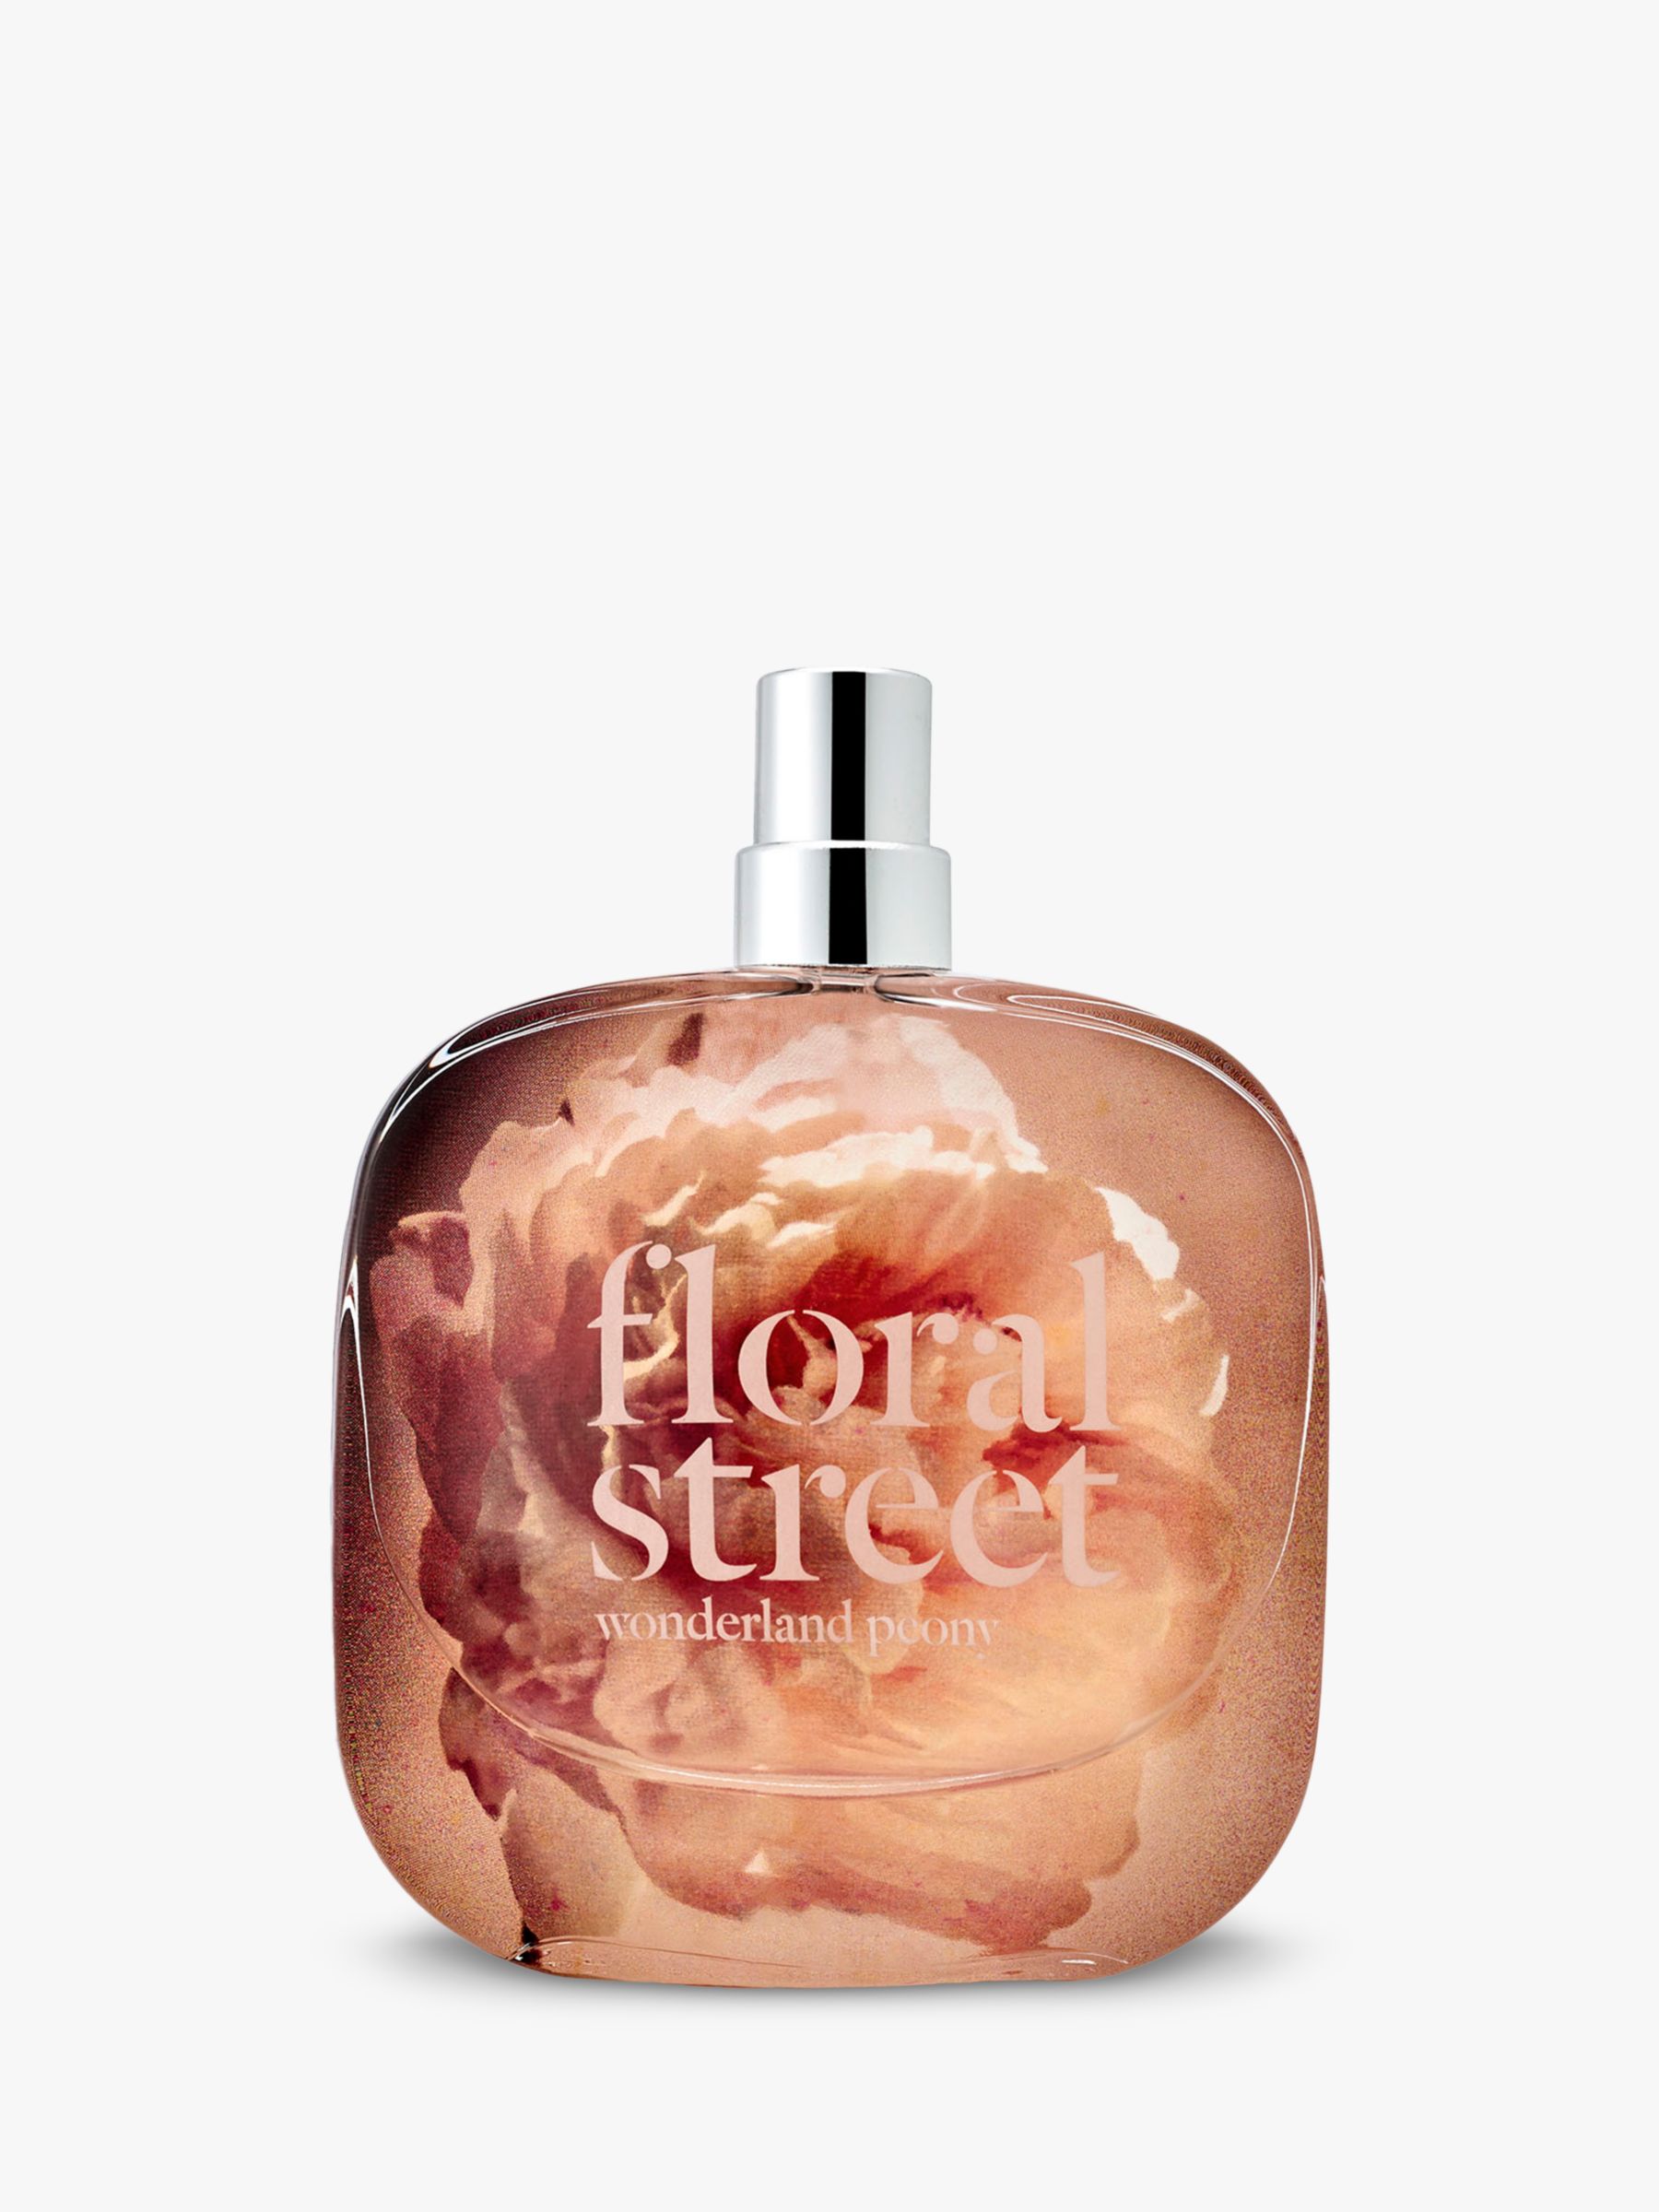 Floral Street Wonderland Peony Eau de Parfum, 50ml at John Lewis & Partners